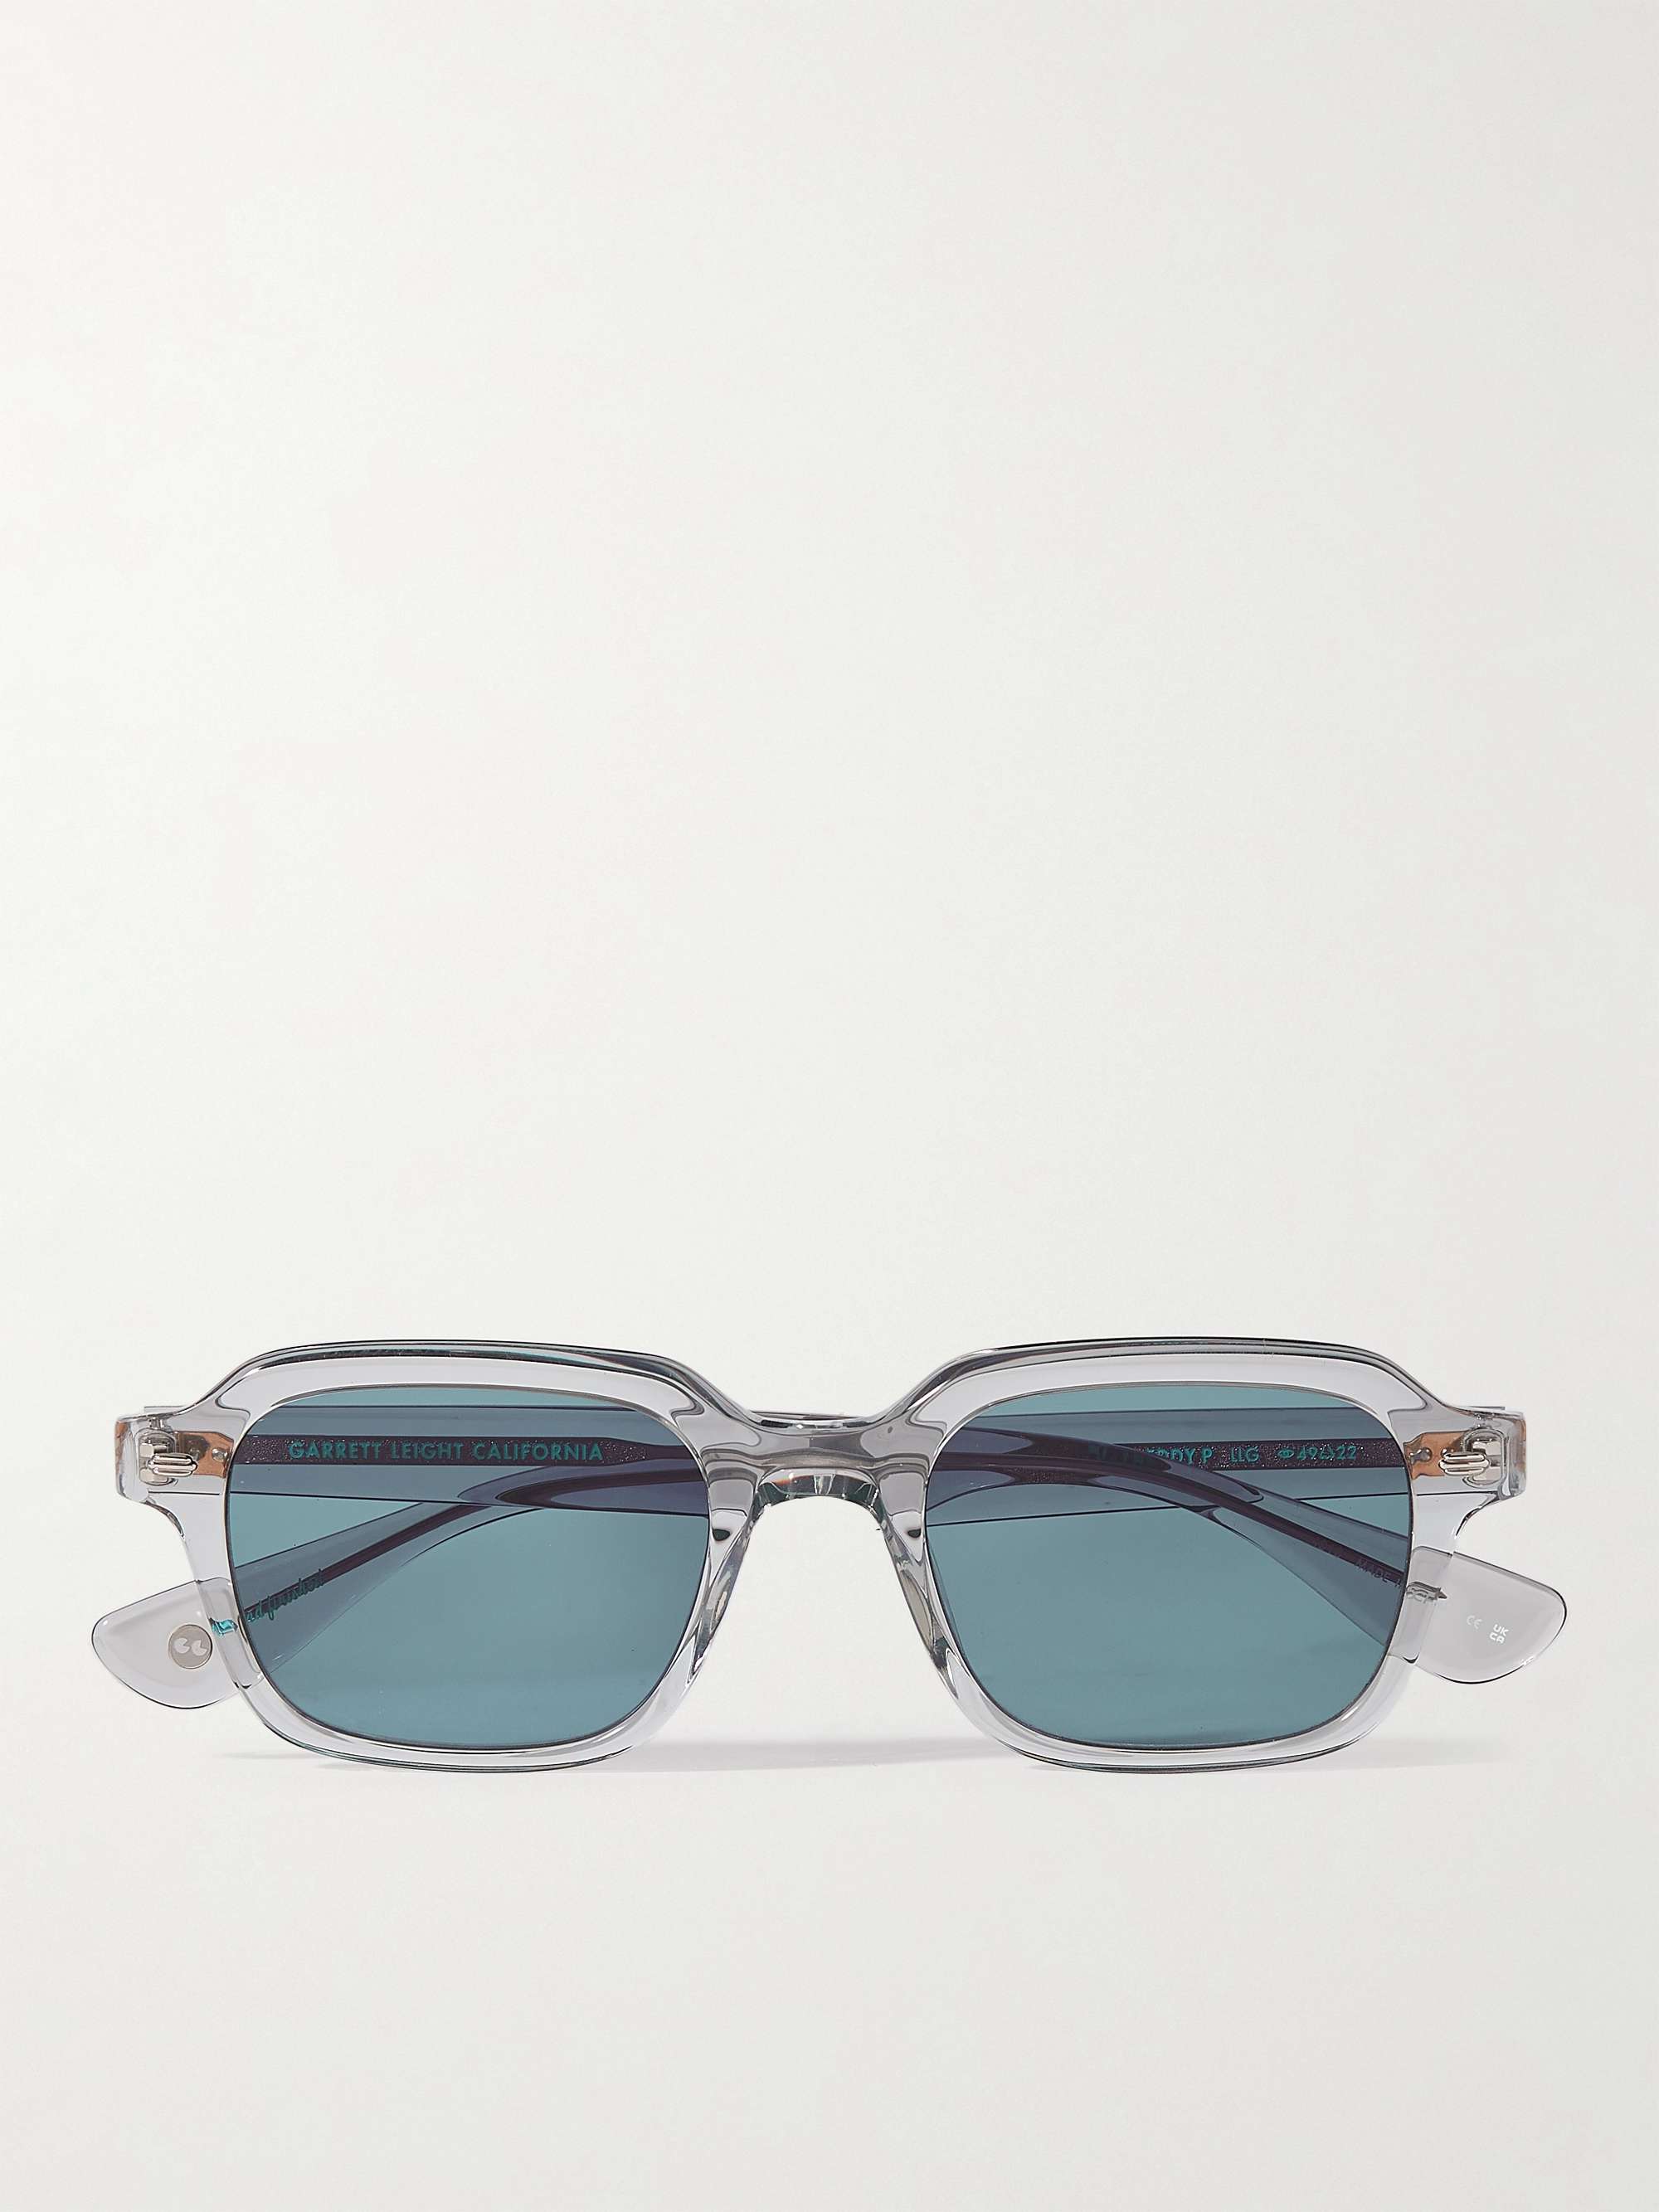 GARRETT LEIGHT CALIFORNIA OPTICAL Freddy P Square-Frame Acetate Sunglasses